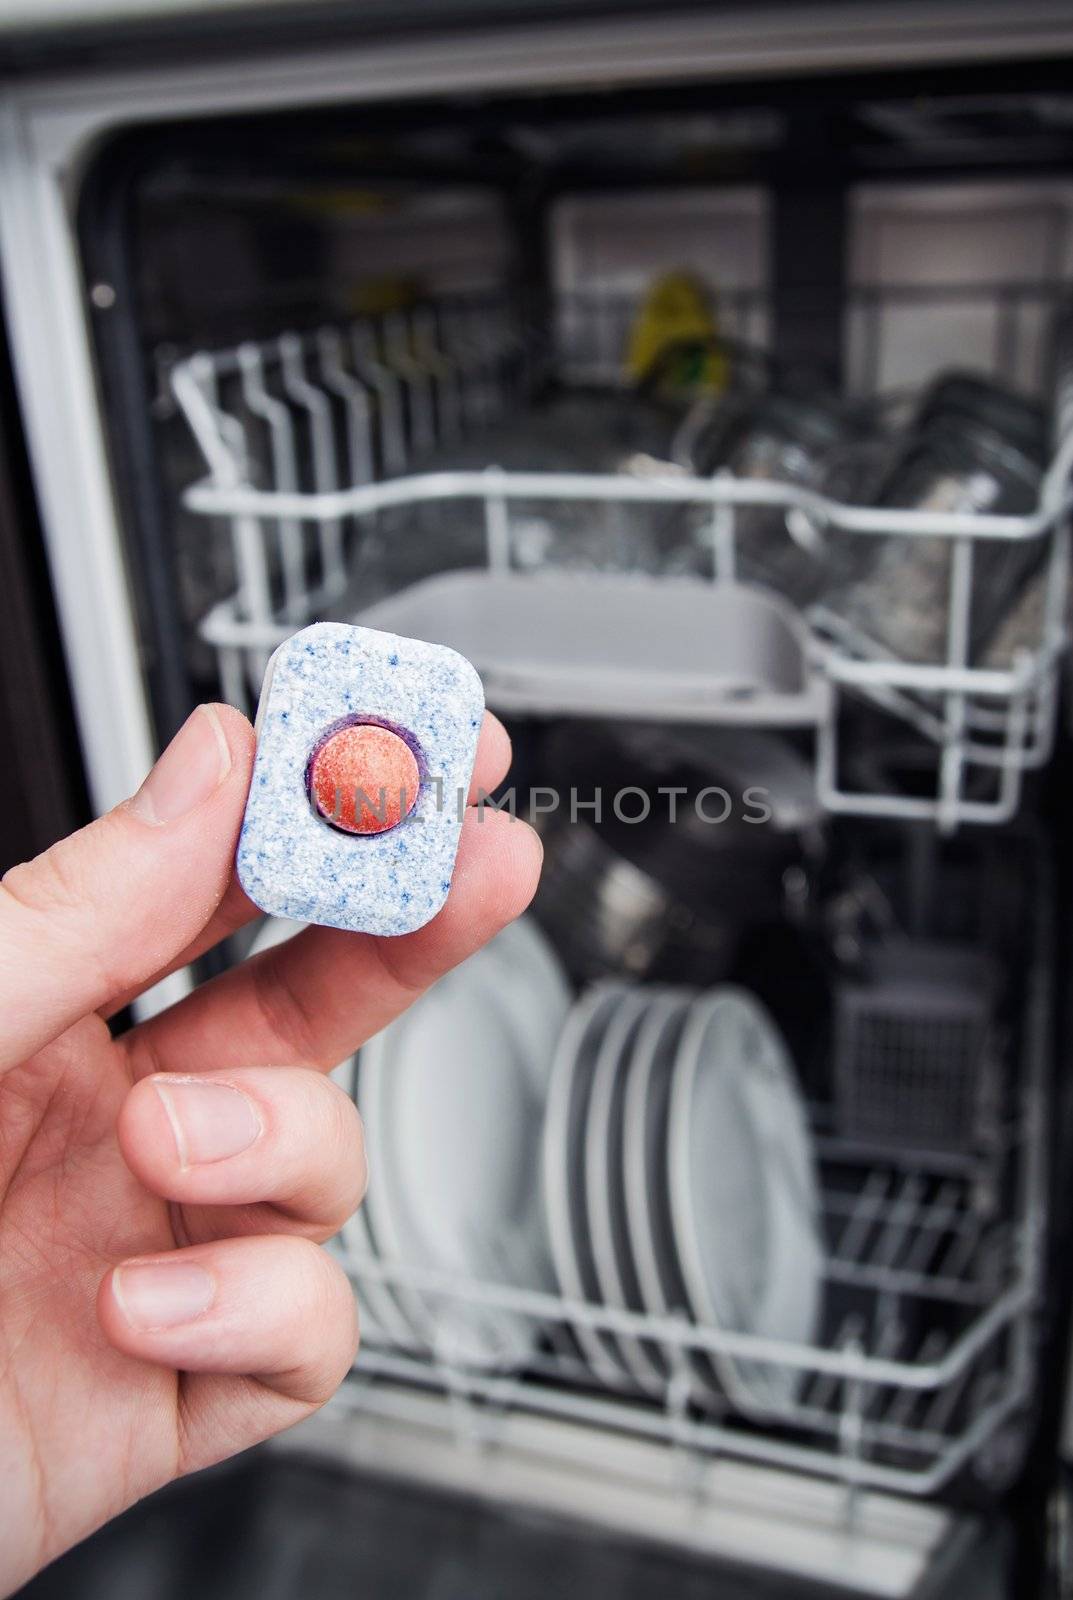 Hand holding dishwashing tablet. Dishwasher in background